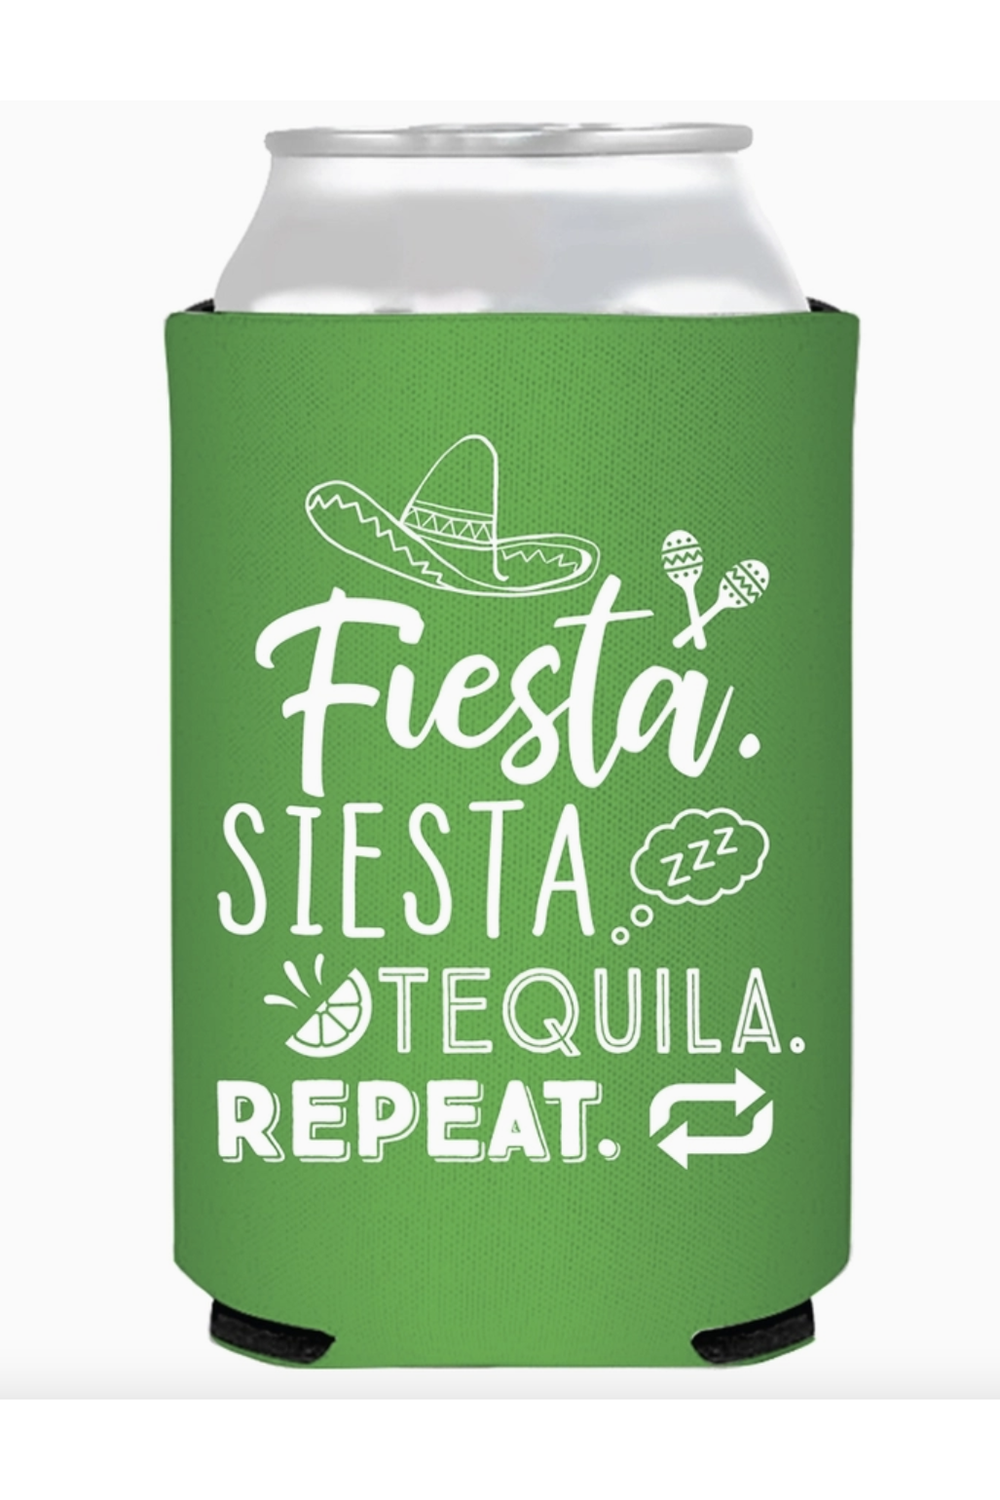 Can Cooler - Fiesta, Siesta, Tequila, Repeat